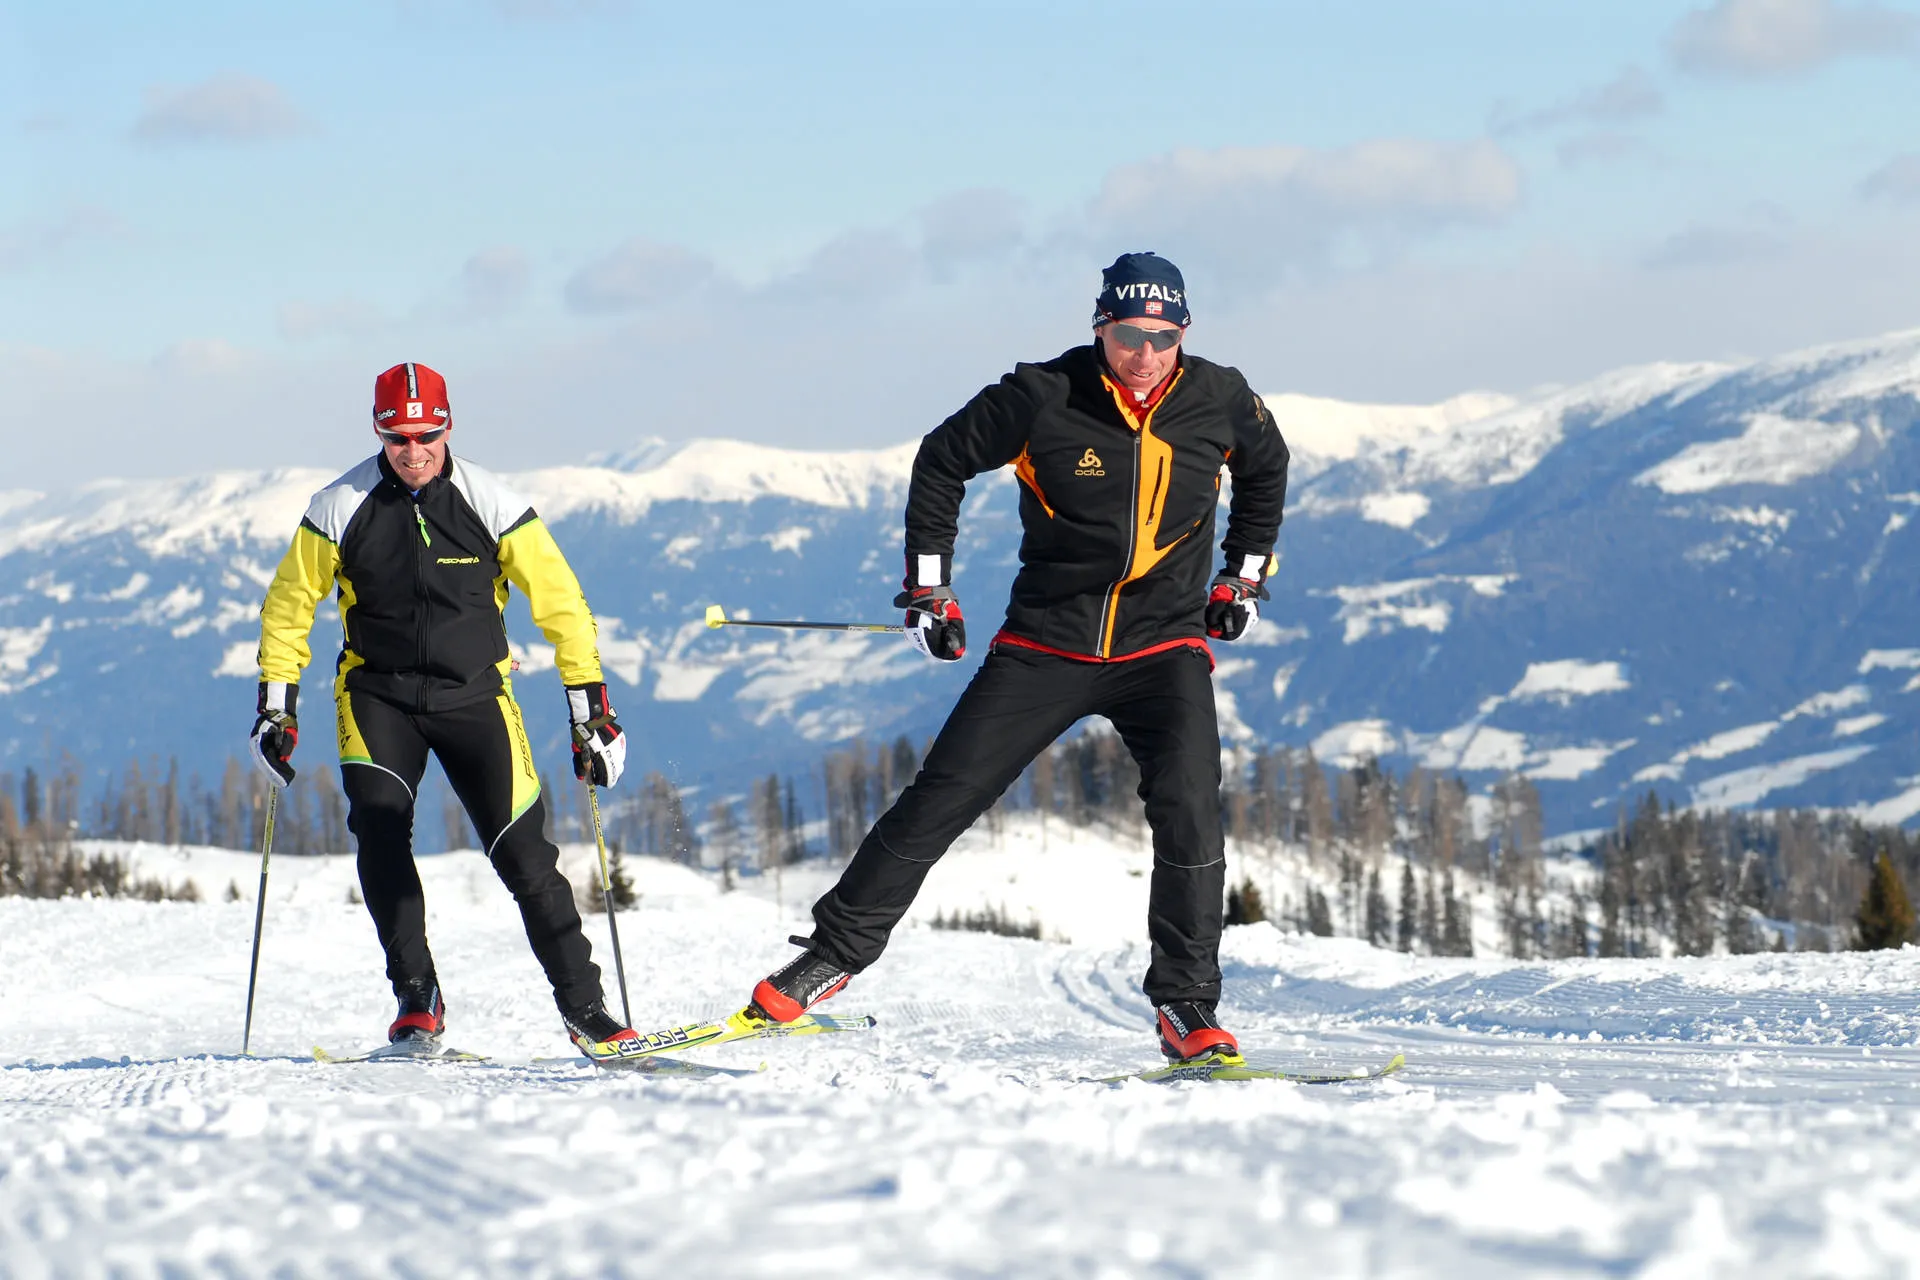 Ski and Snowboard School Gerlitzen Villach in Austria, Europe | Snowboarding,Skiing - Rated 3.6